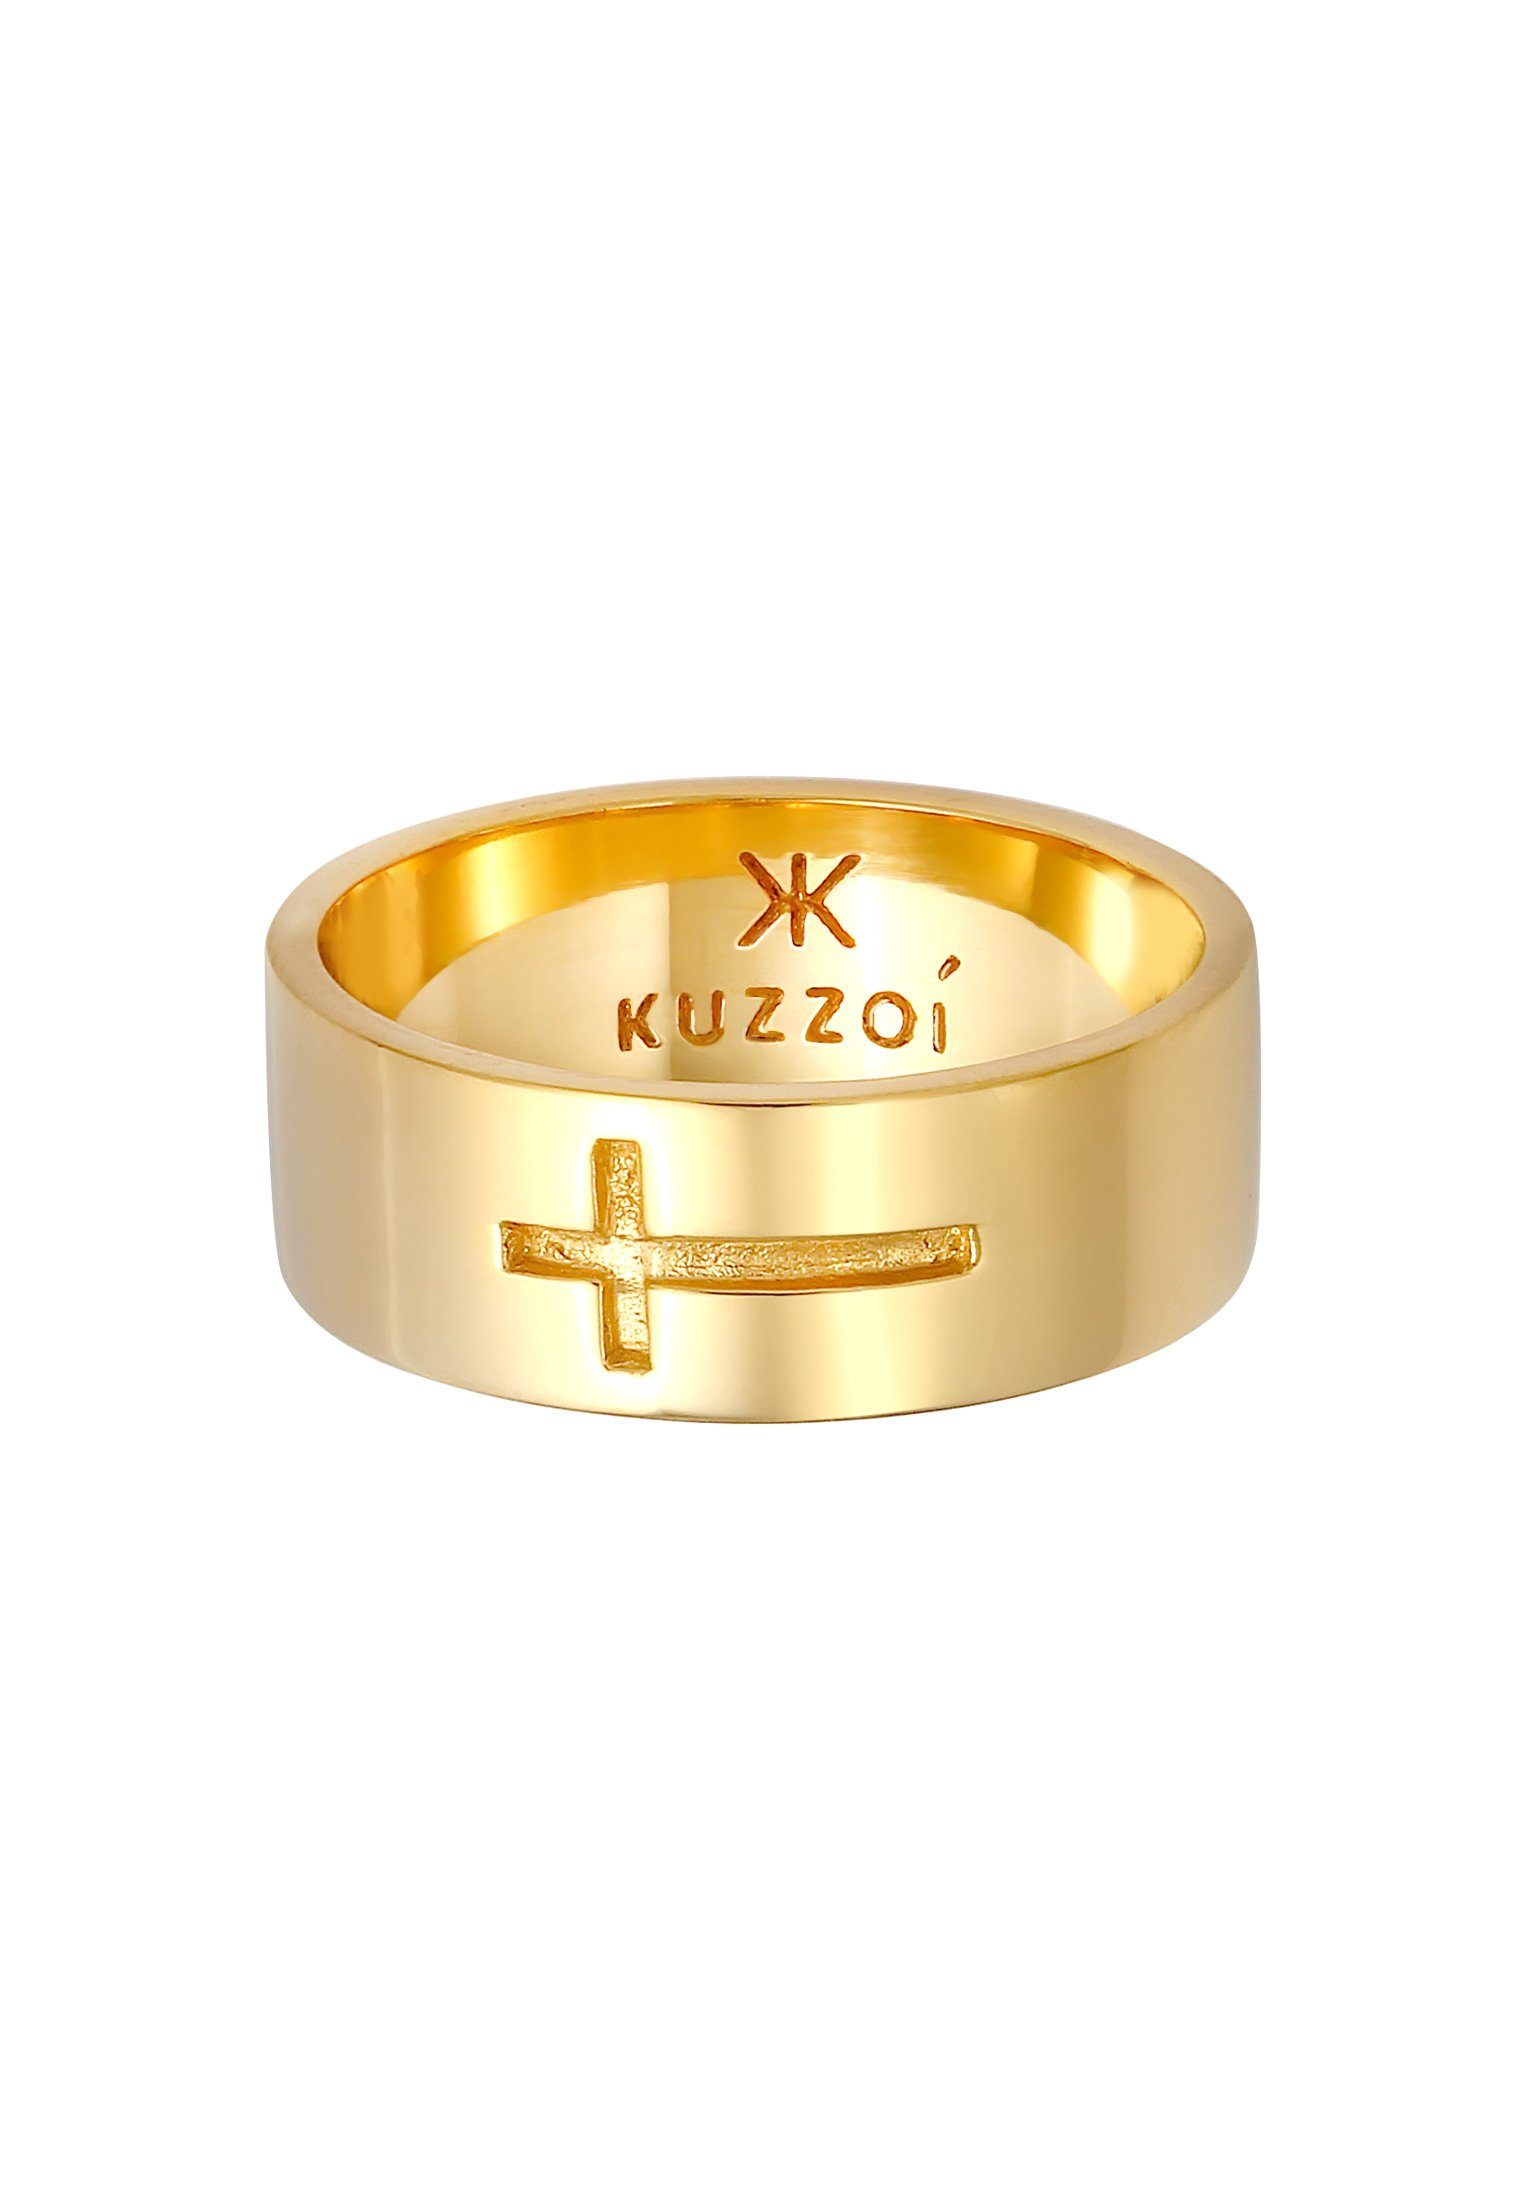 Kuzzoi Silberring Gold Bandring Glanz Kreuz 925 Herren Silber